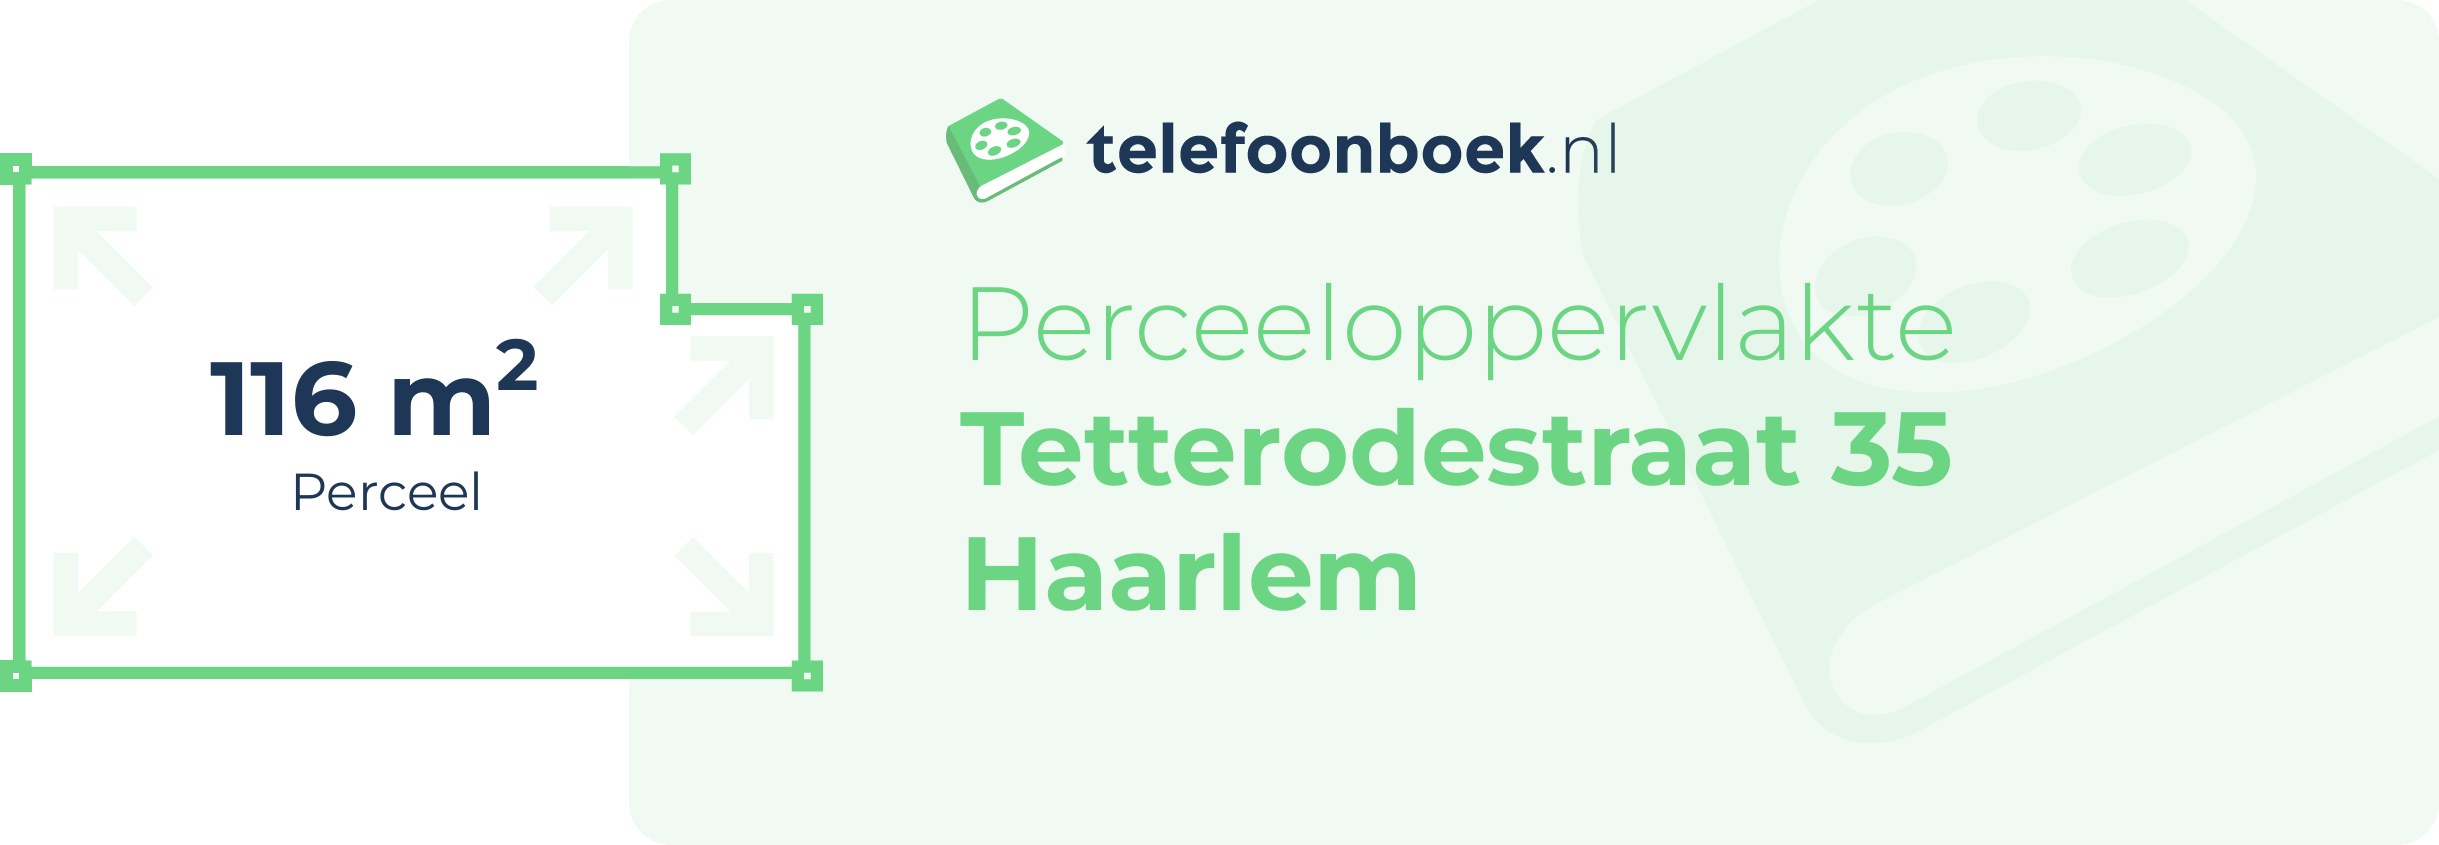 Perceeloppervlakte Tetterodestraat 35 Haarlem